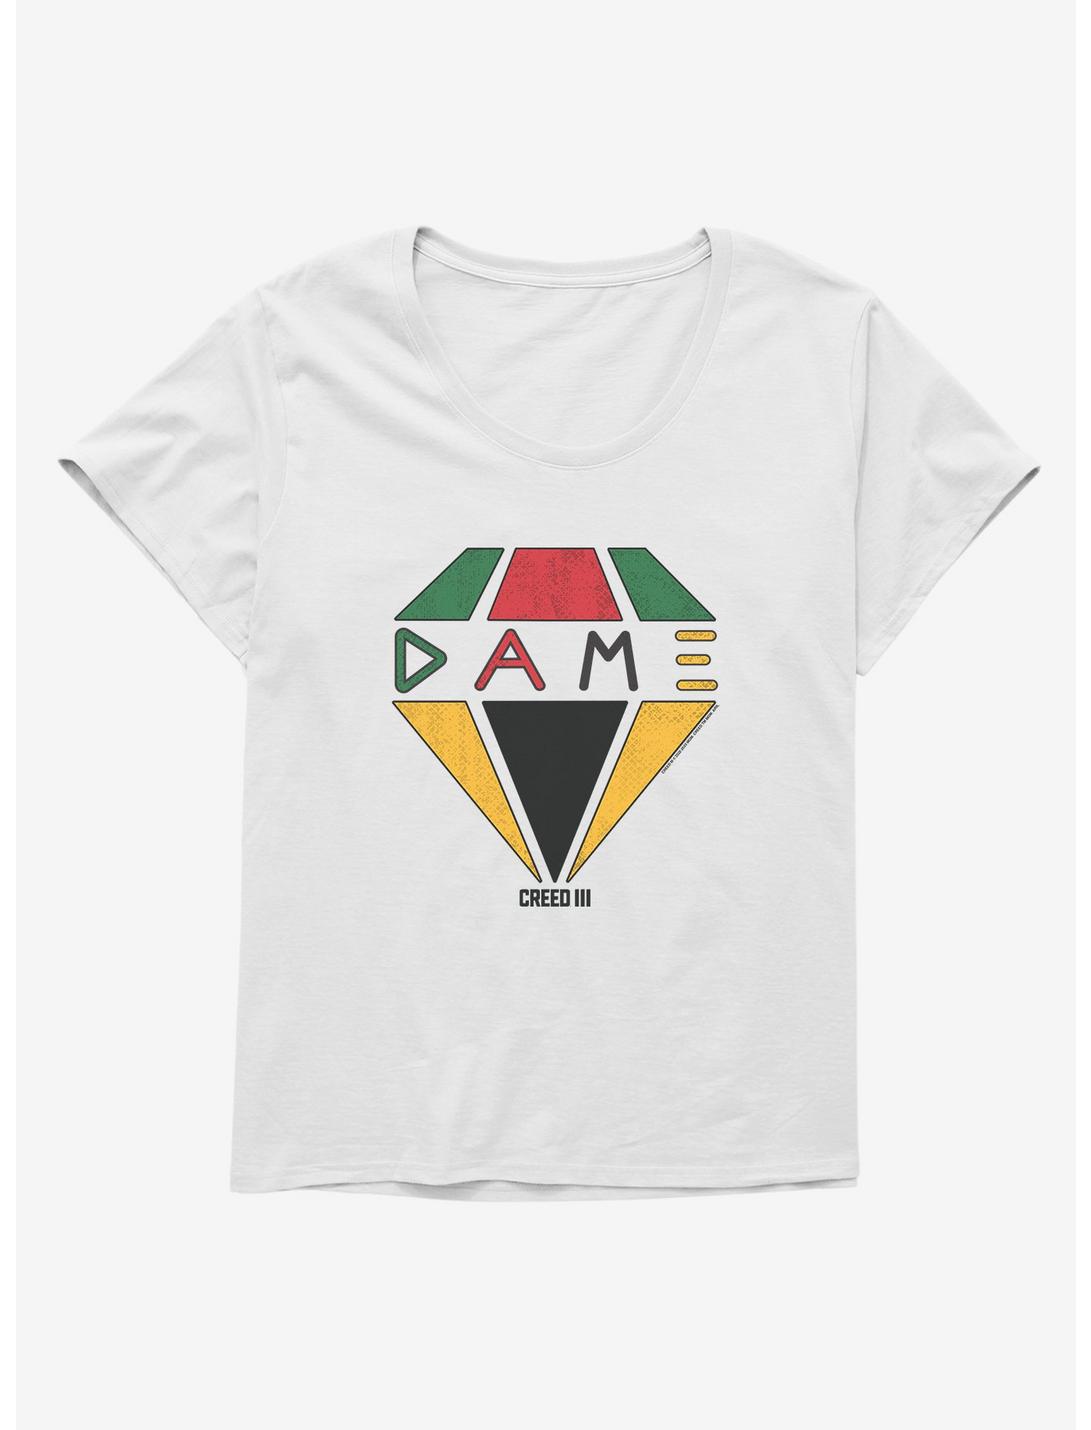 Creed III Dame Symbol Womens T-Shirt Plus Size, WHITE, hi-res